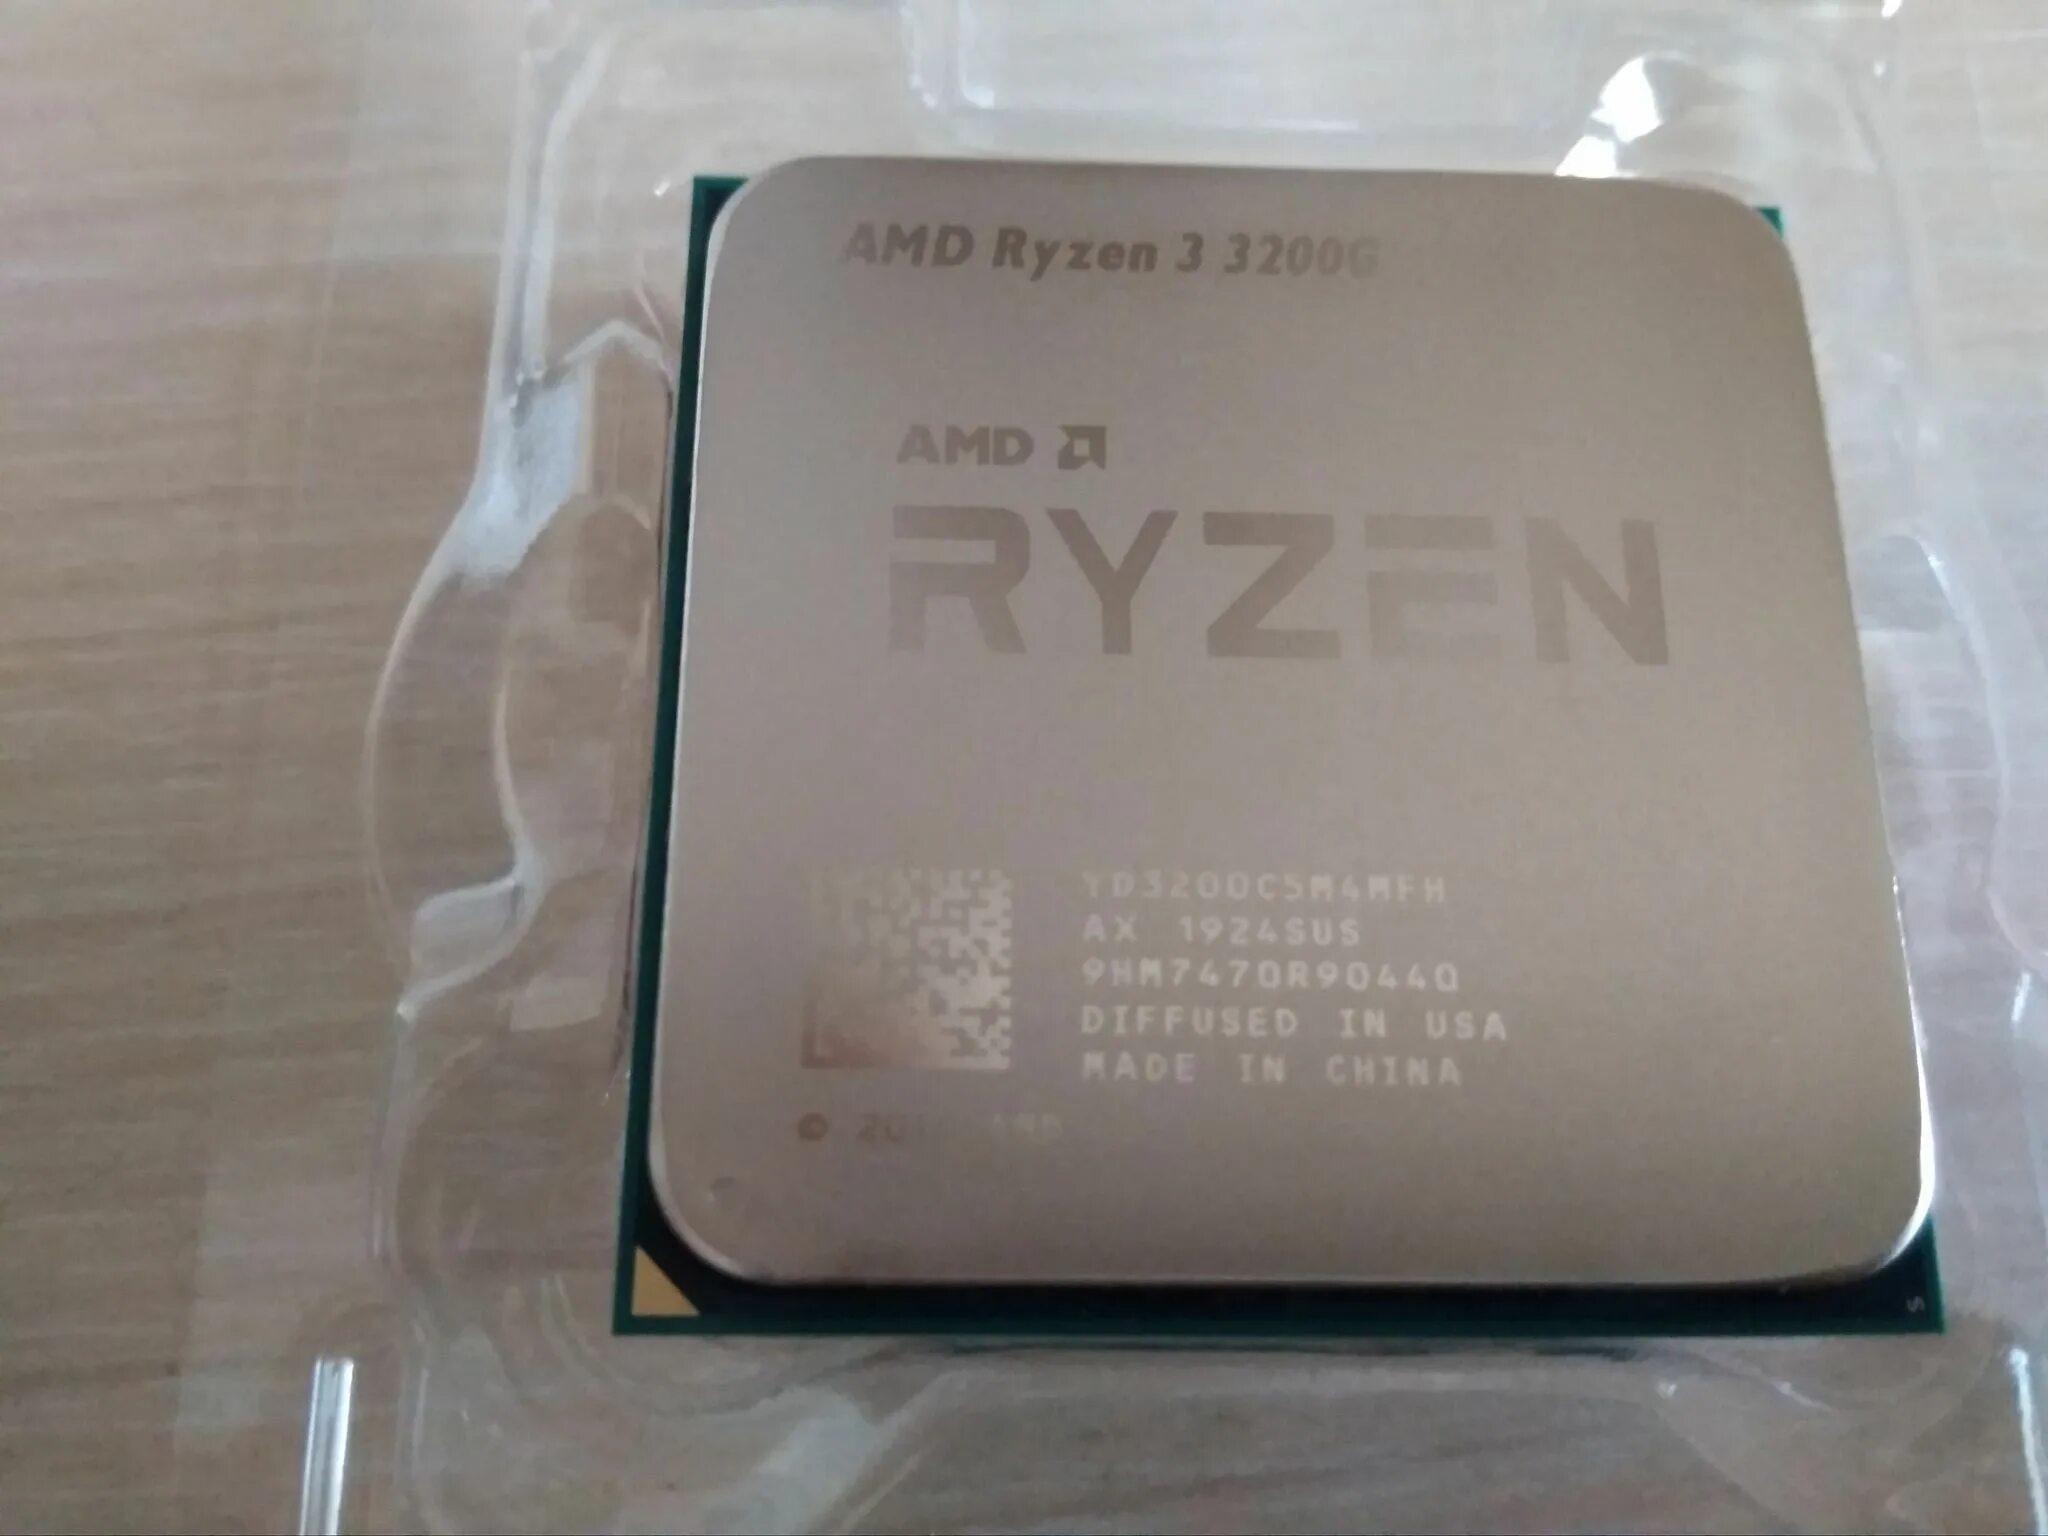 Ryzen 3 3200g. Процессор AMD Ryzen 3 3200g. AMD Ryzen 3 3200g OEM. Процессор AMD Ryzen 3 3200g am4. Ryzen 3 pro 3200g